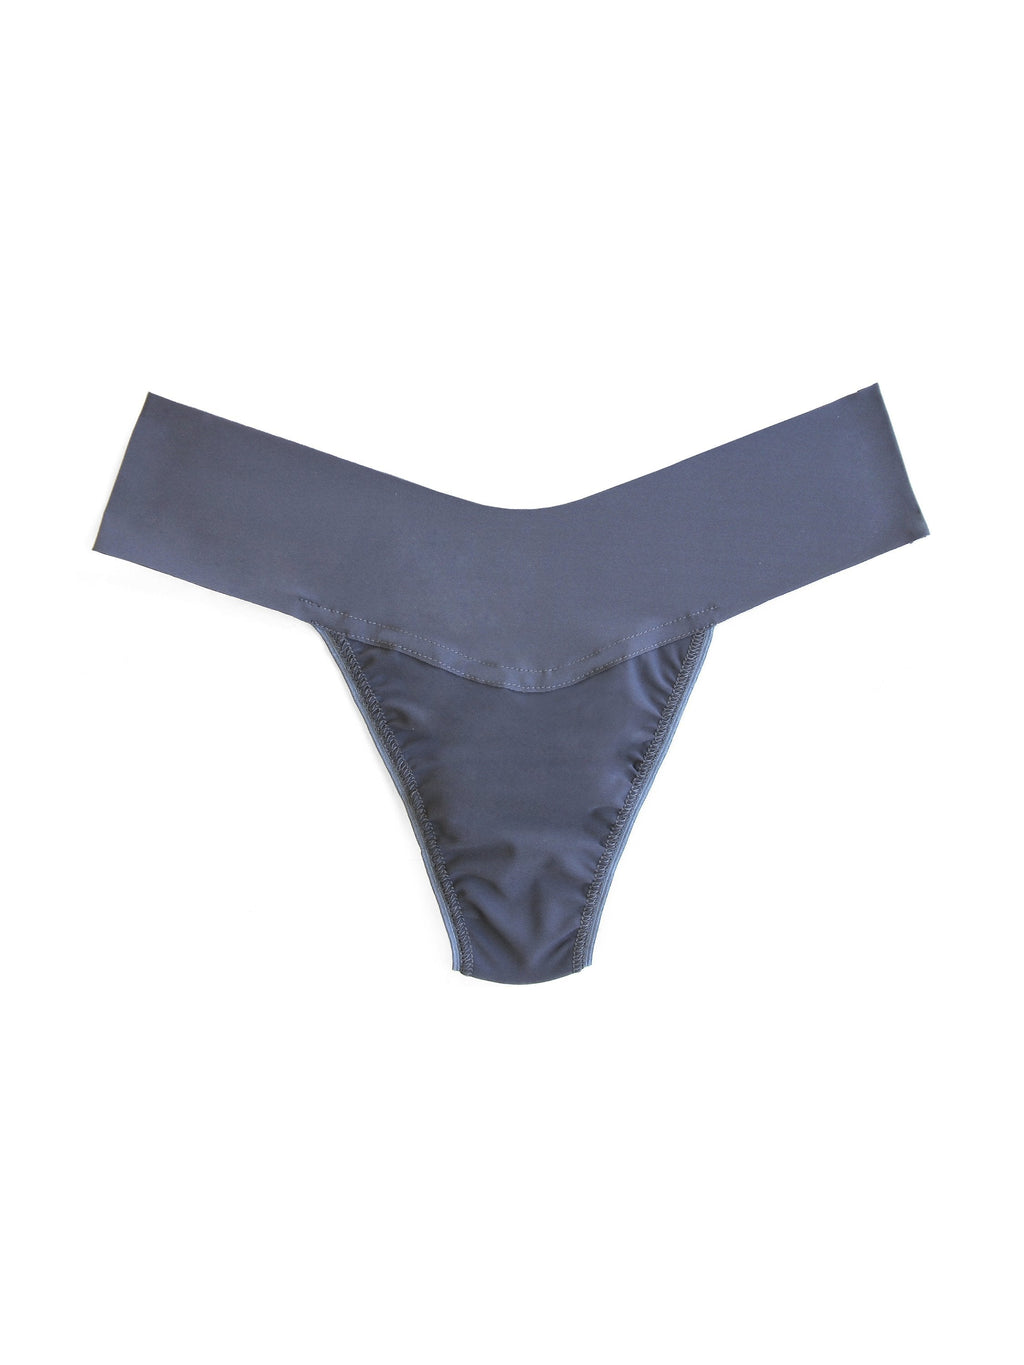 MOAB Organic Women's Cotton Thong Panty - M53121